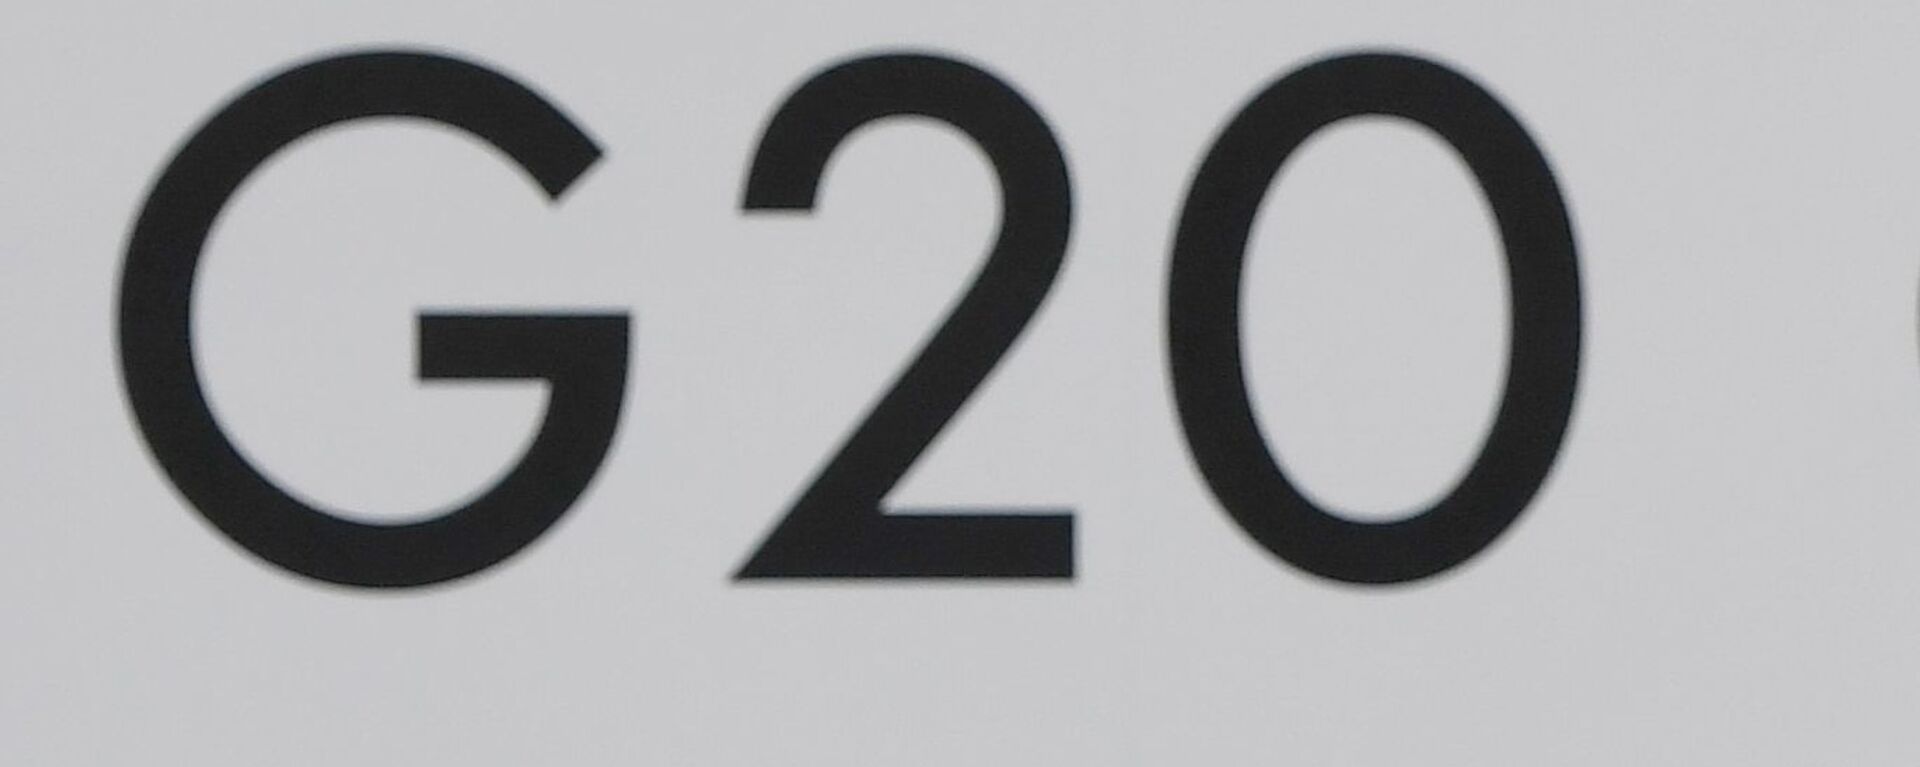 G20 - 俄羅斯衛星通訊社, 1920, 16.11.2022